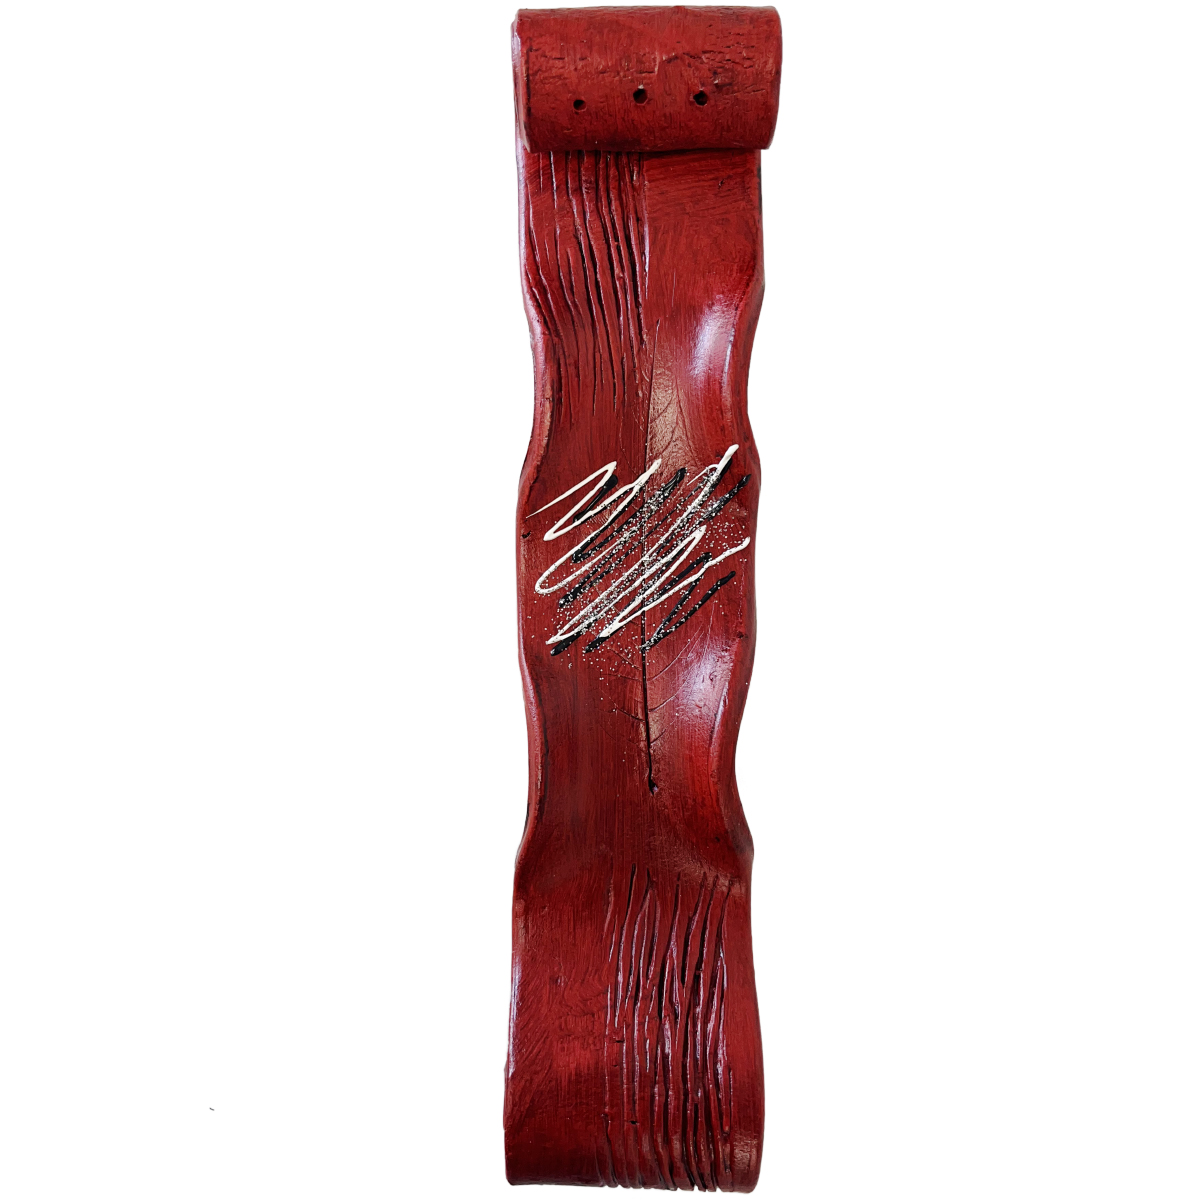 Red handmade incense holder